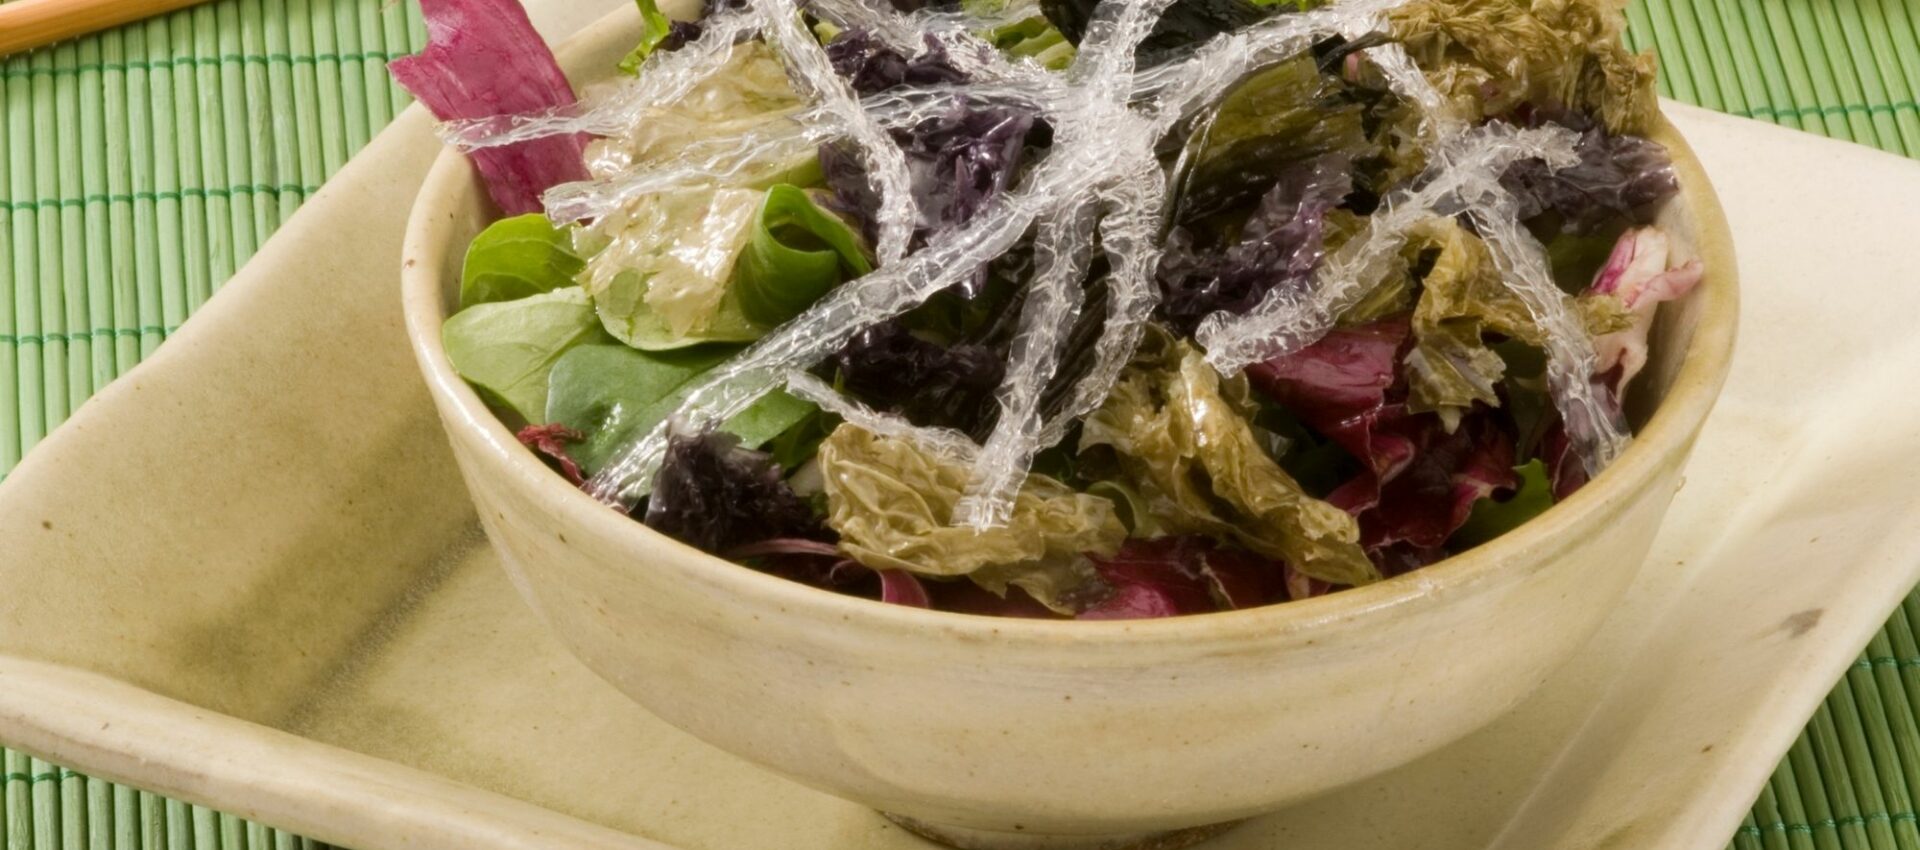 A bowl of seaweed salad